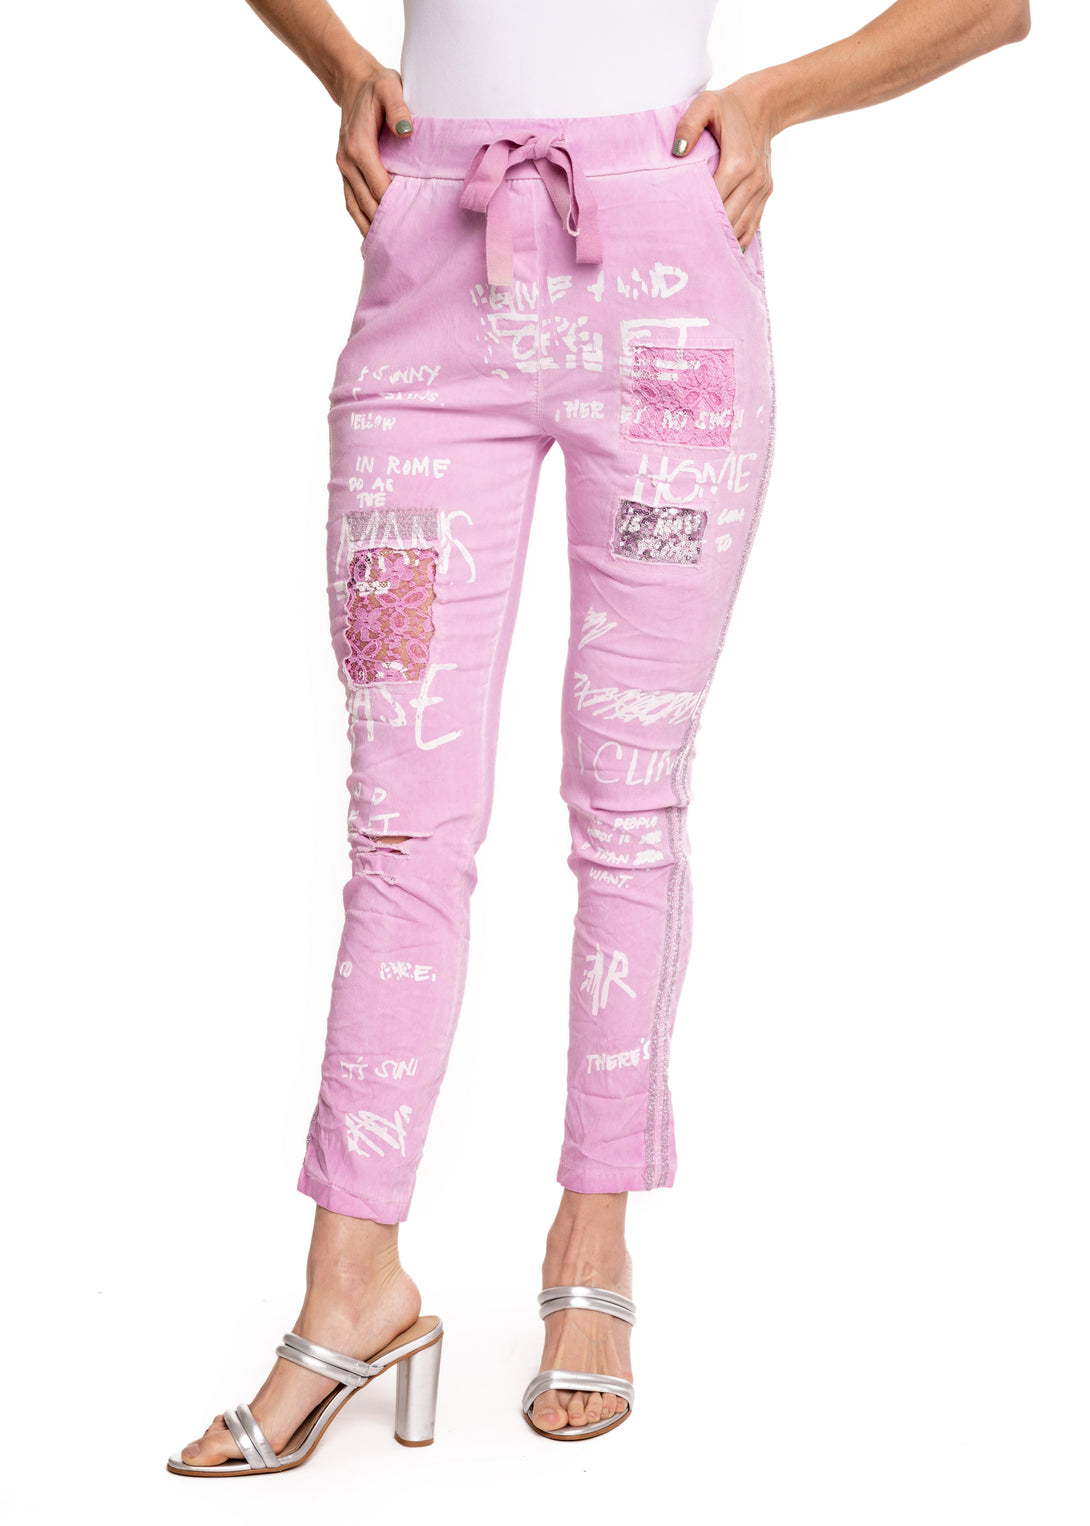 New Livia Pants in Petal Pink - Imagine Fashion